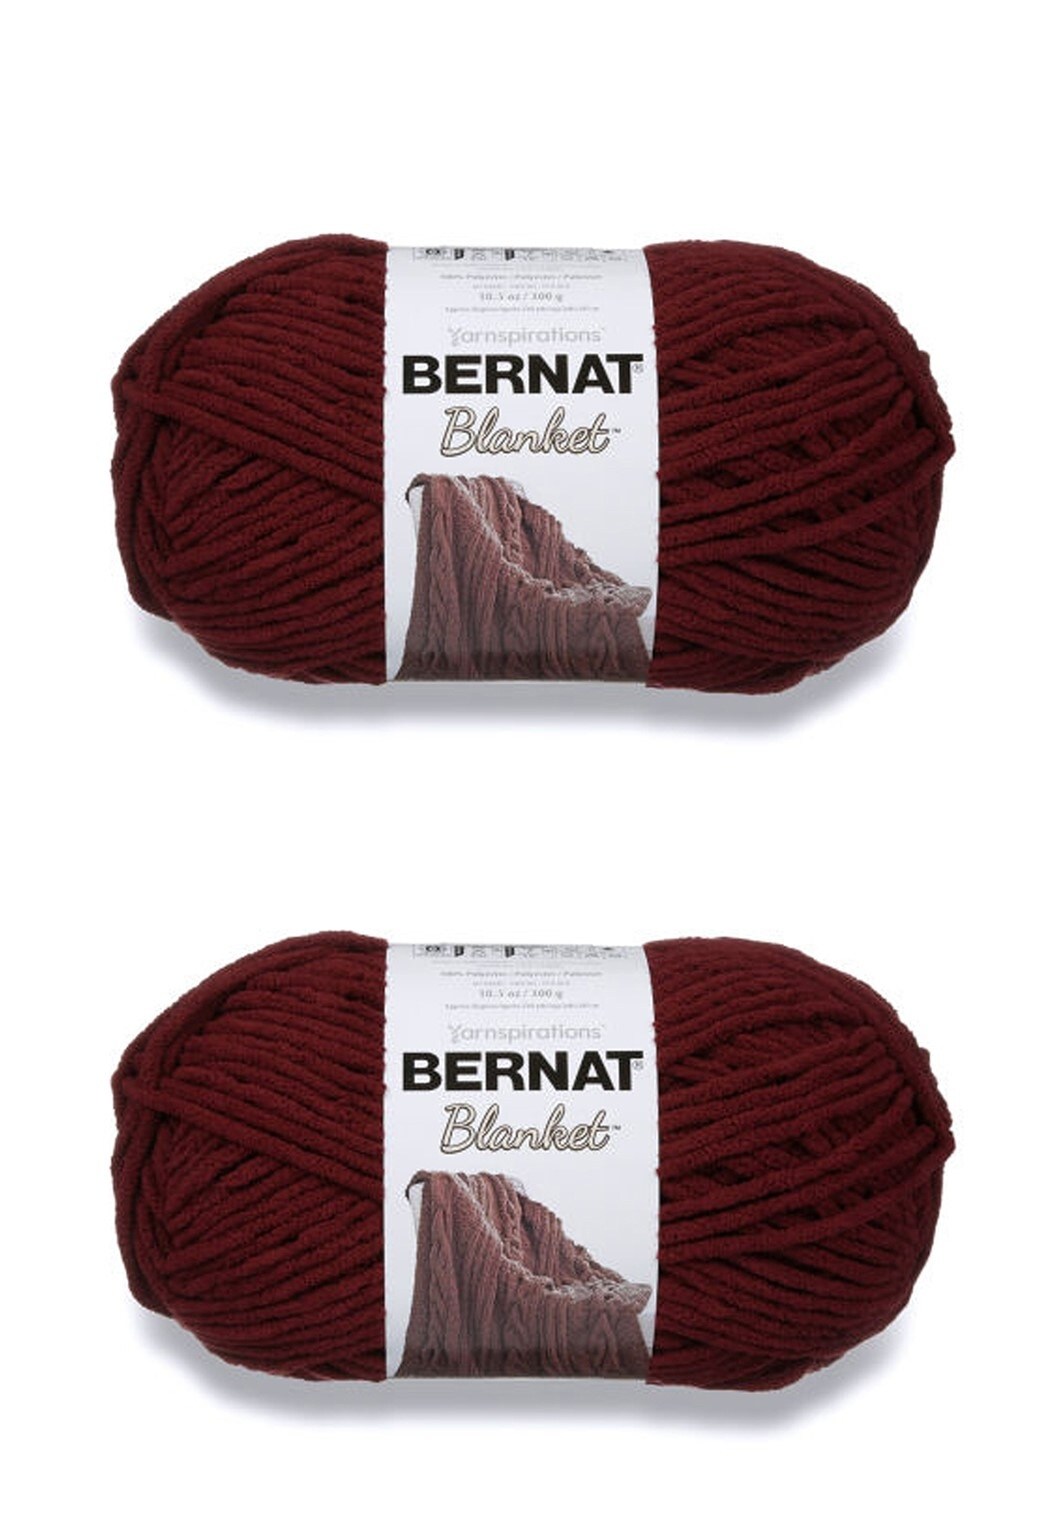 Bernat Blanket Big Ball Yarn - Purple Plum, Multipack of 4